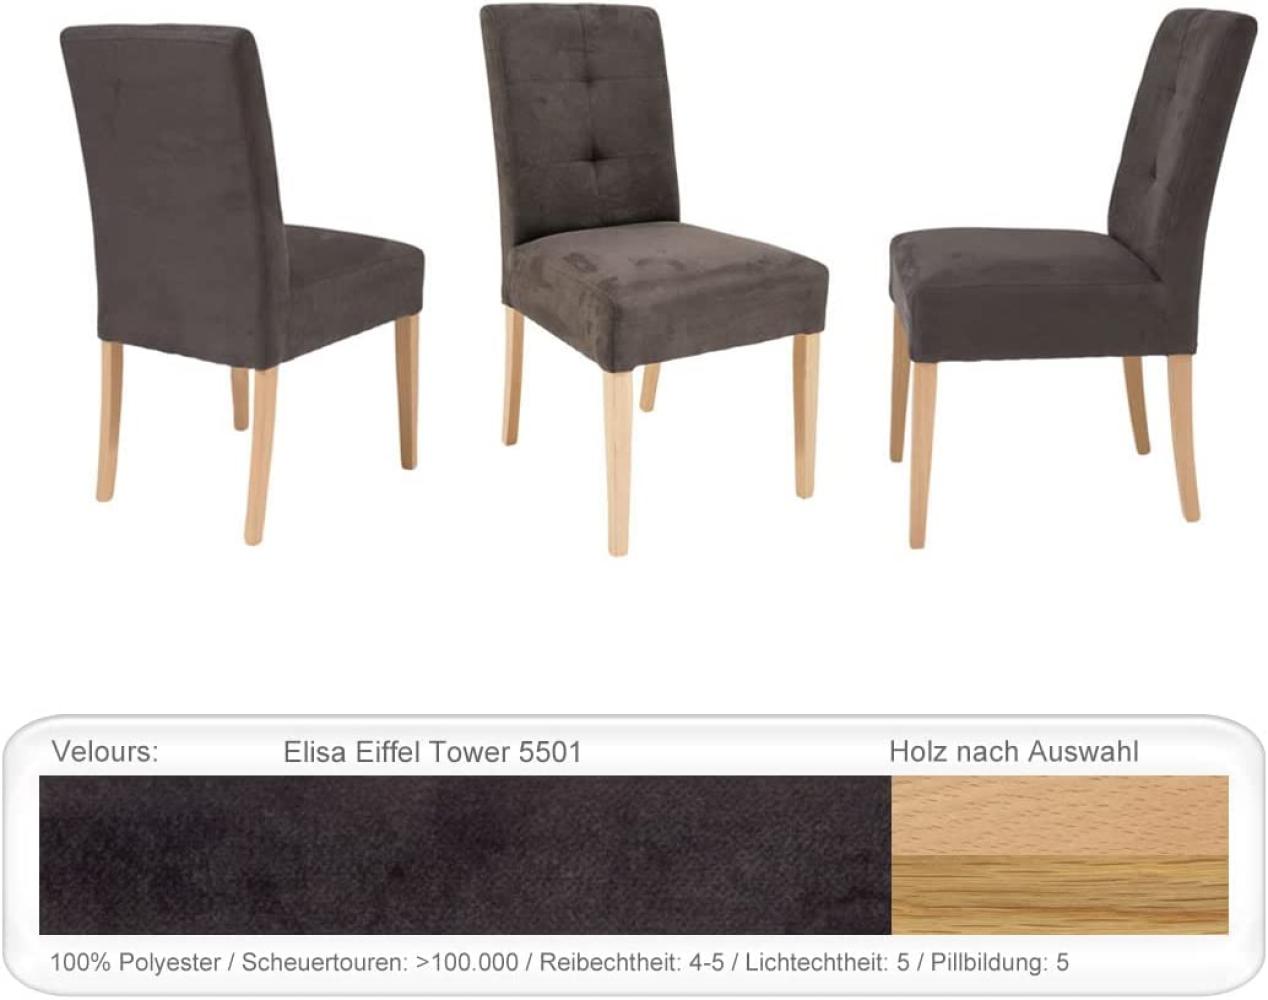 4x Stuhl Agnes 2 Varianten Polsterstuhl Esszimmerstuhl Massivholzstuhl Eiche natur lackiert, Elisa Eiffel Tower Bild 1